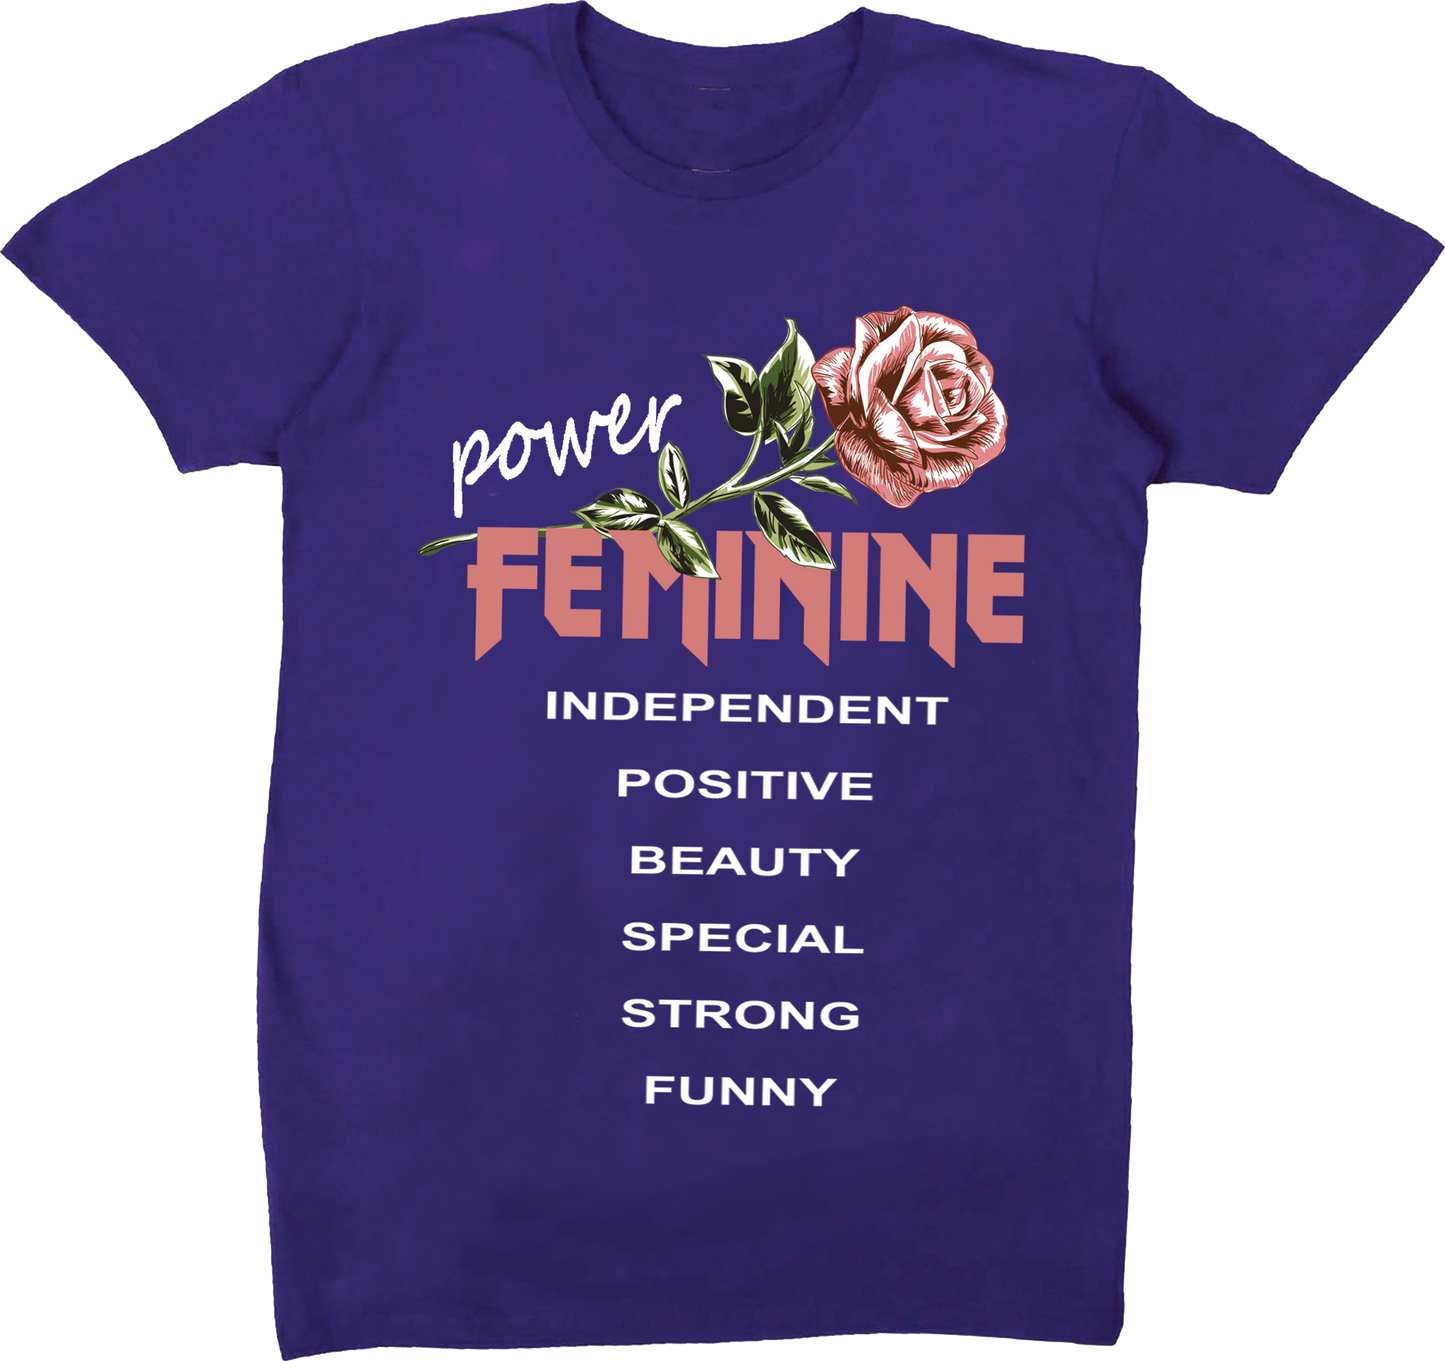 "Feminine Power" T-Shirt